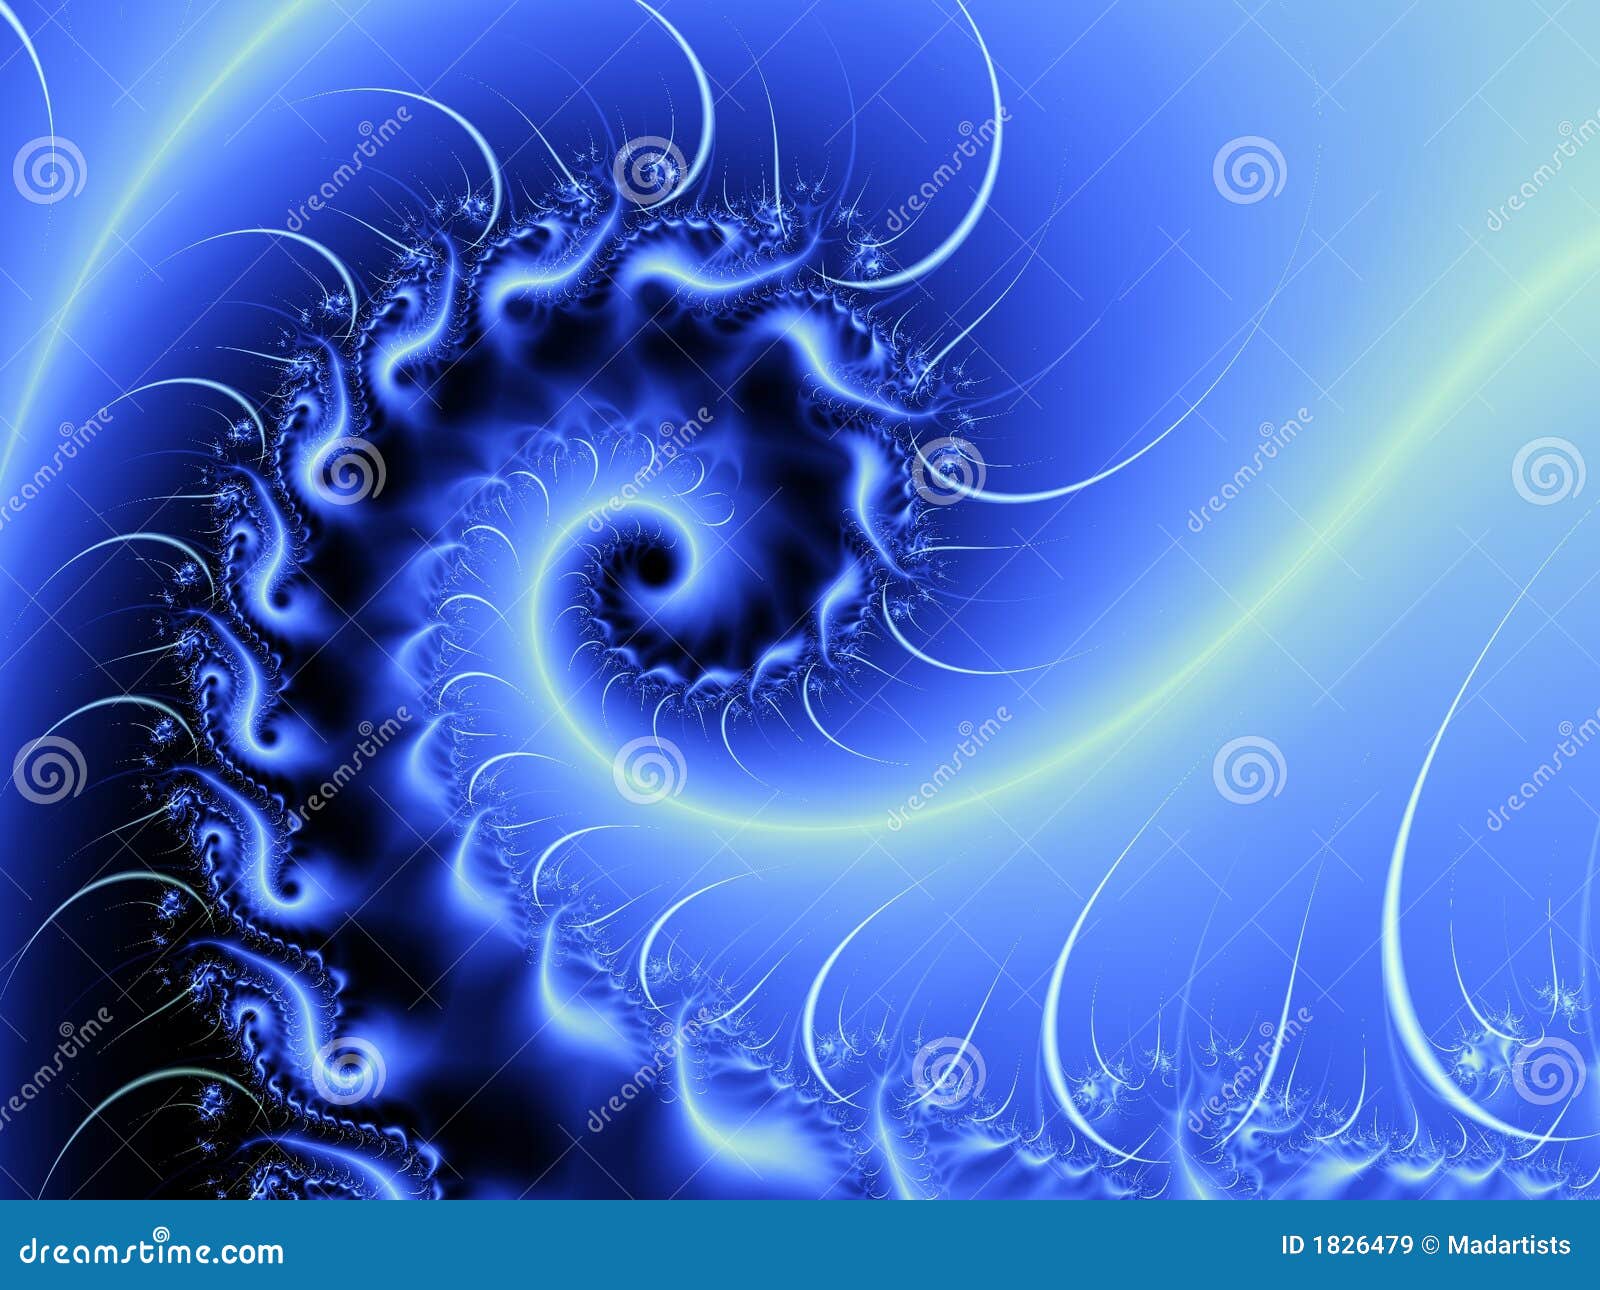 blue spiral wave fractal swirl